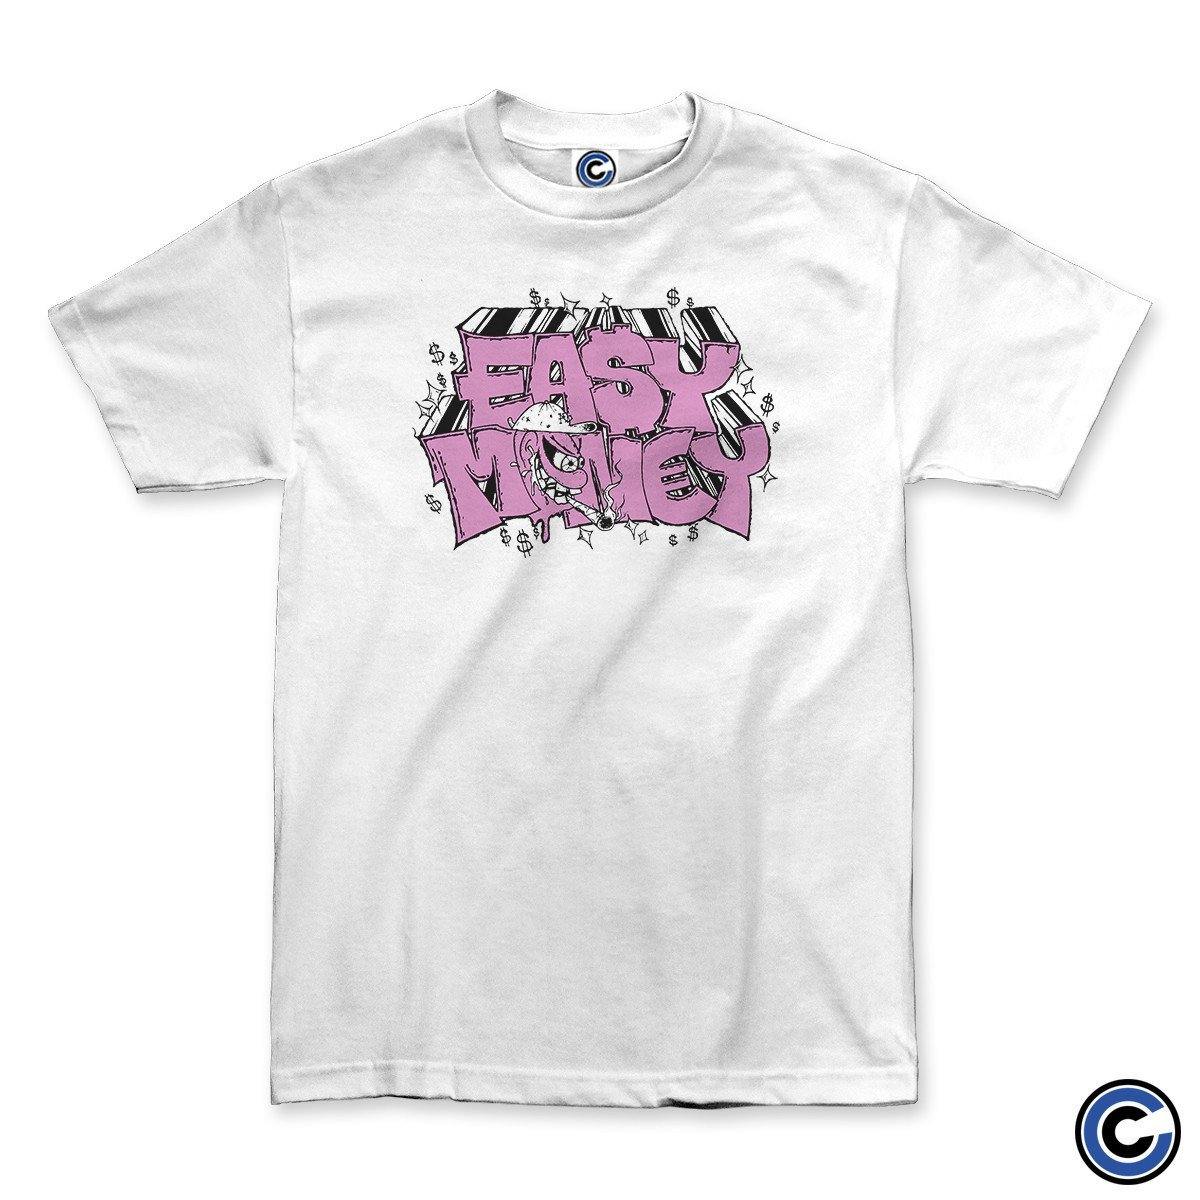 Buy – Easy Money "Blunt Smoker Graf" Shirt – Band & Music Merch – Cold Cuts Merch